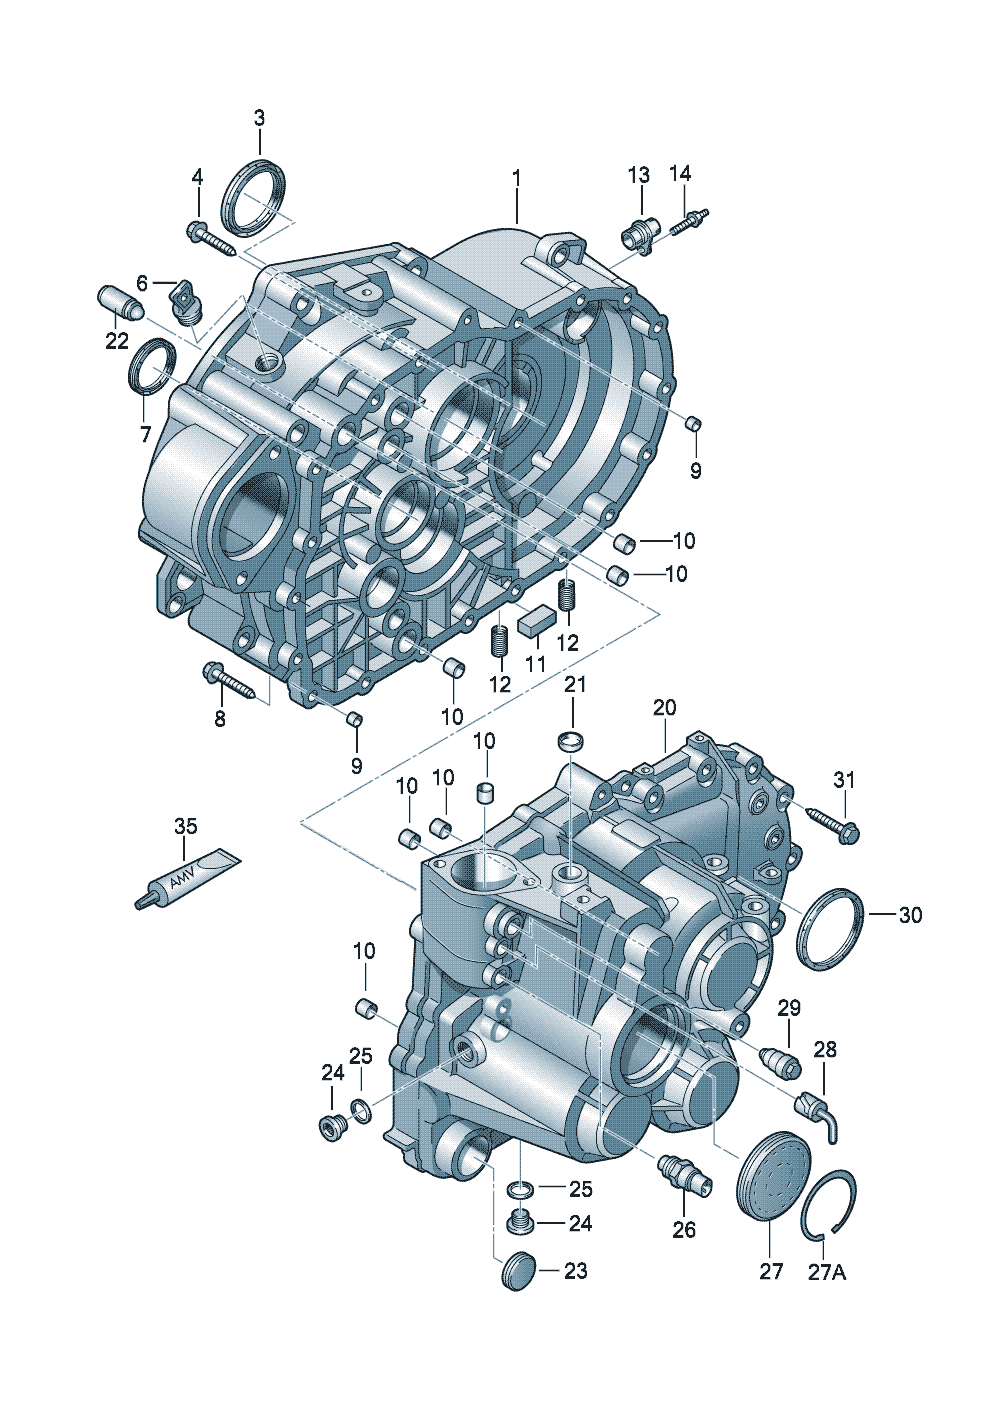 Gear housingfor 6 speed manual gearboxfor four-wheel drive 3.2Ltr. - Audi TT/TTS Coupe/Roadster - att